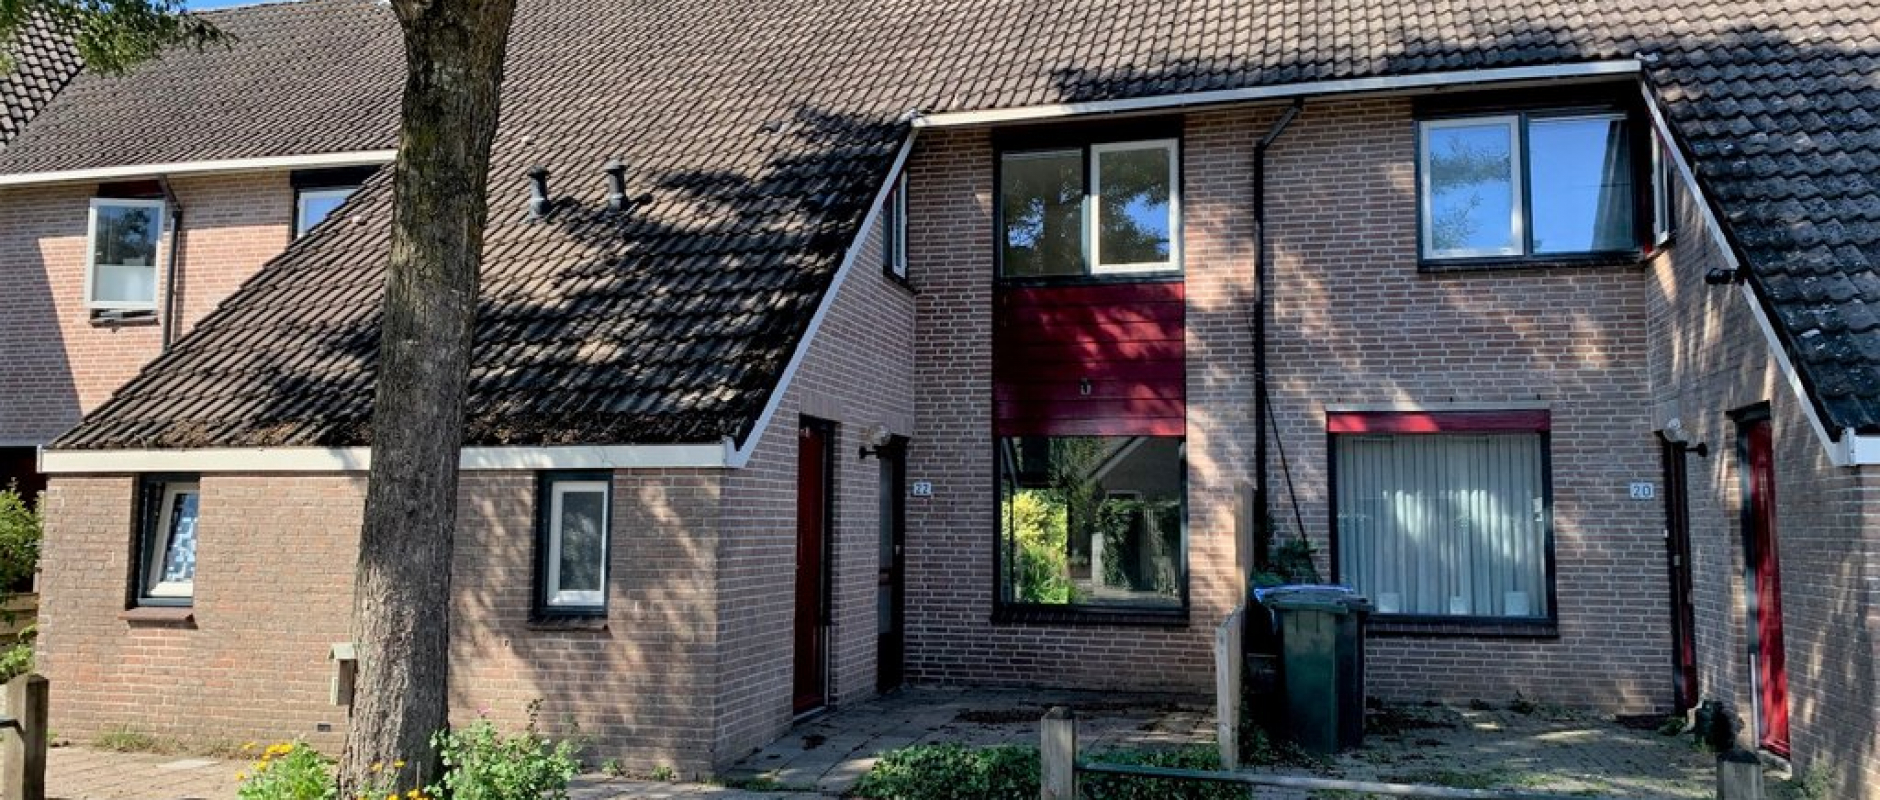 Woning te koop aan de Kadeneterkamp 22 te Zwolle